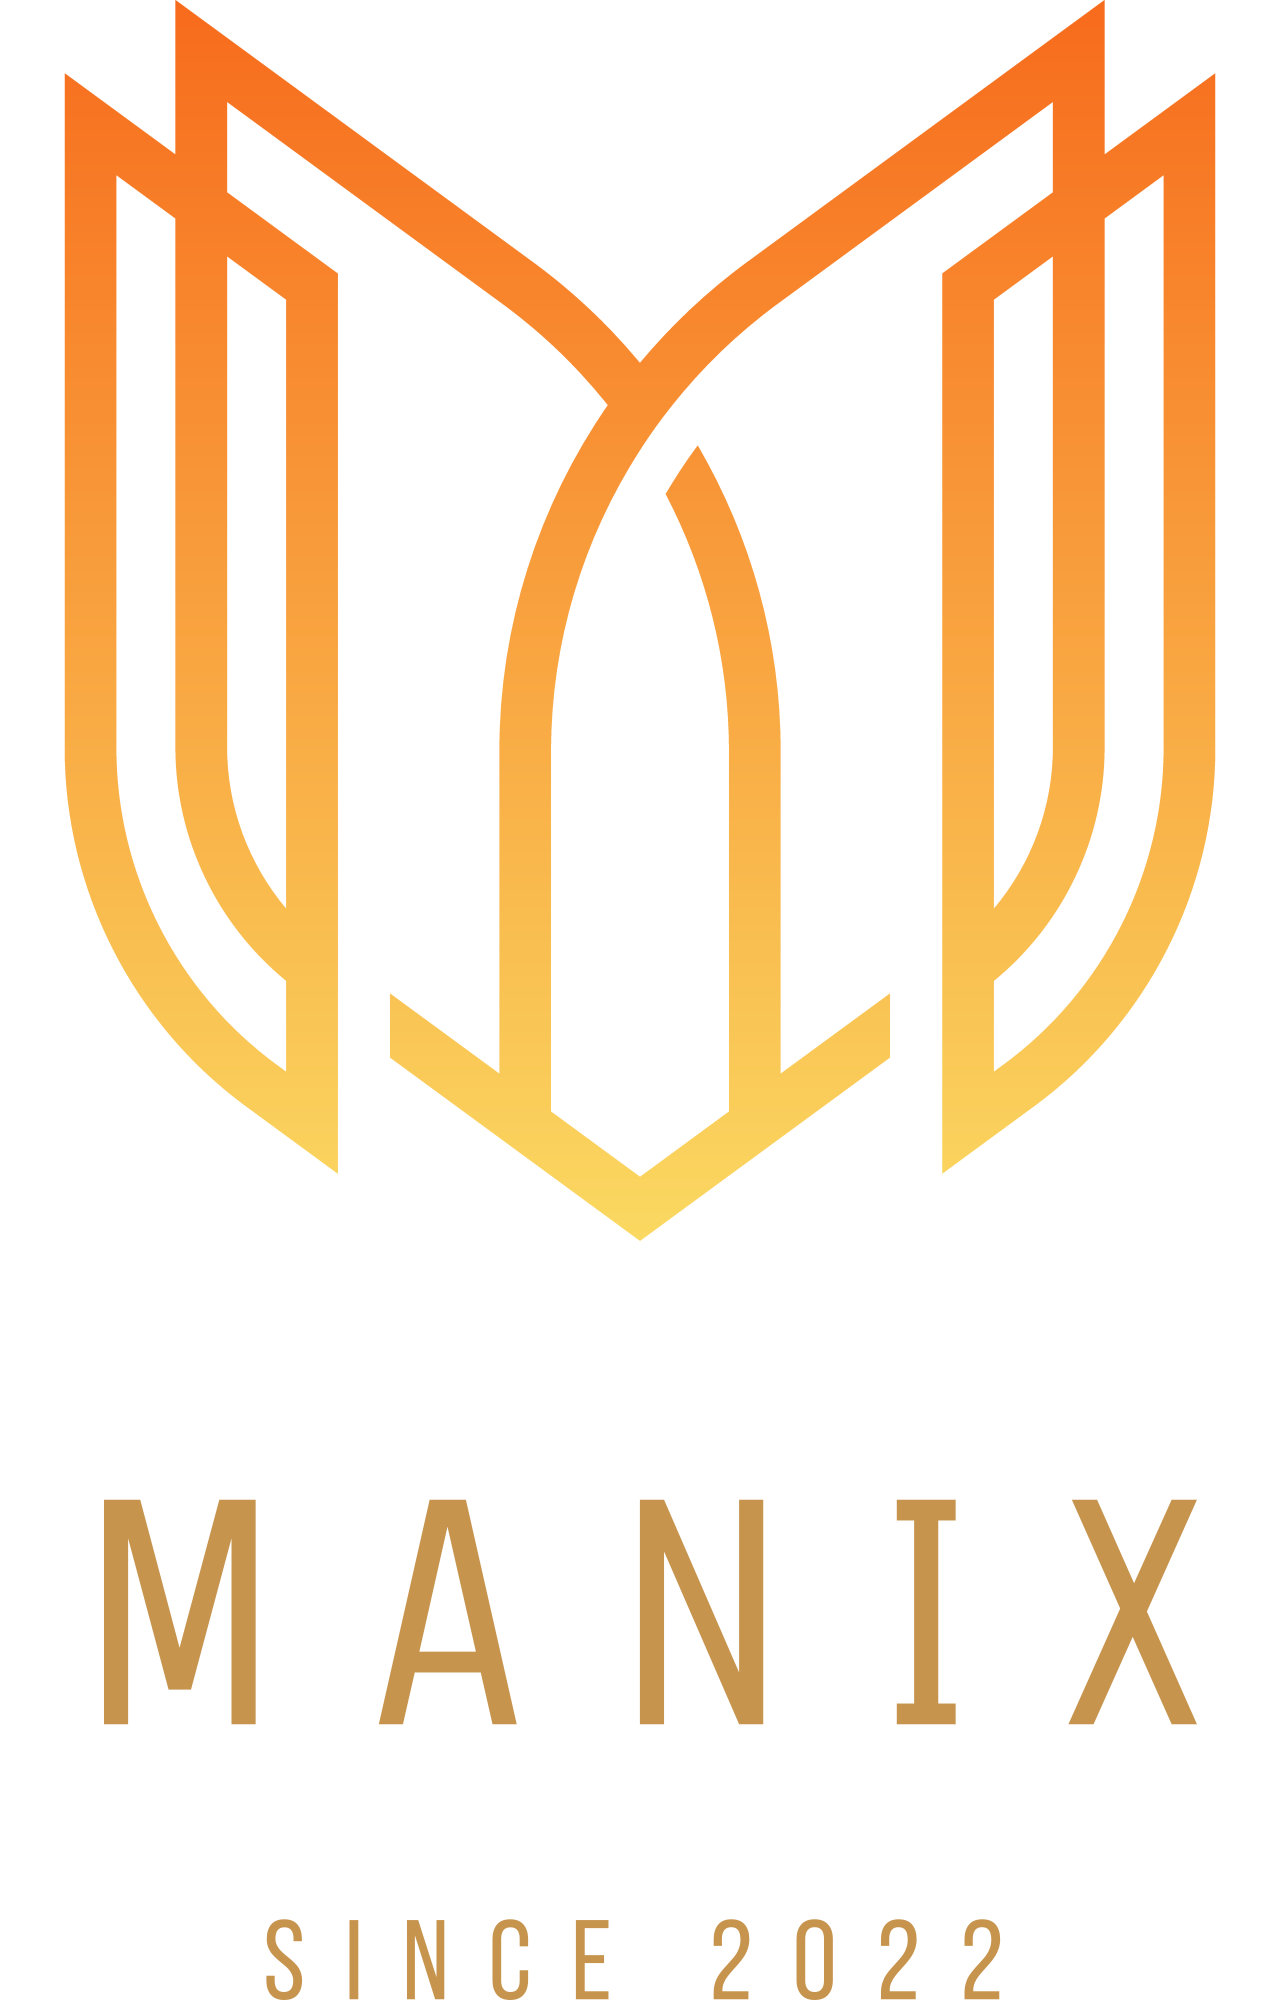 Manix's web page